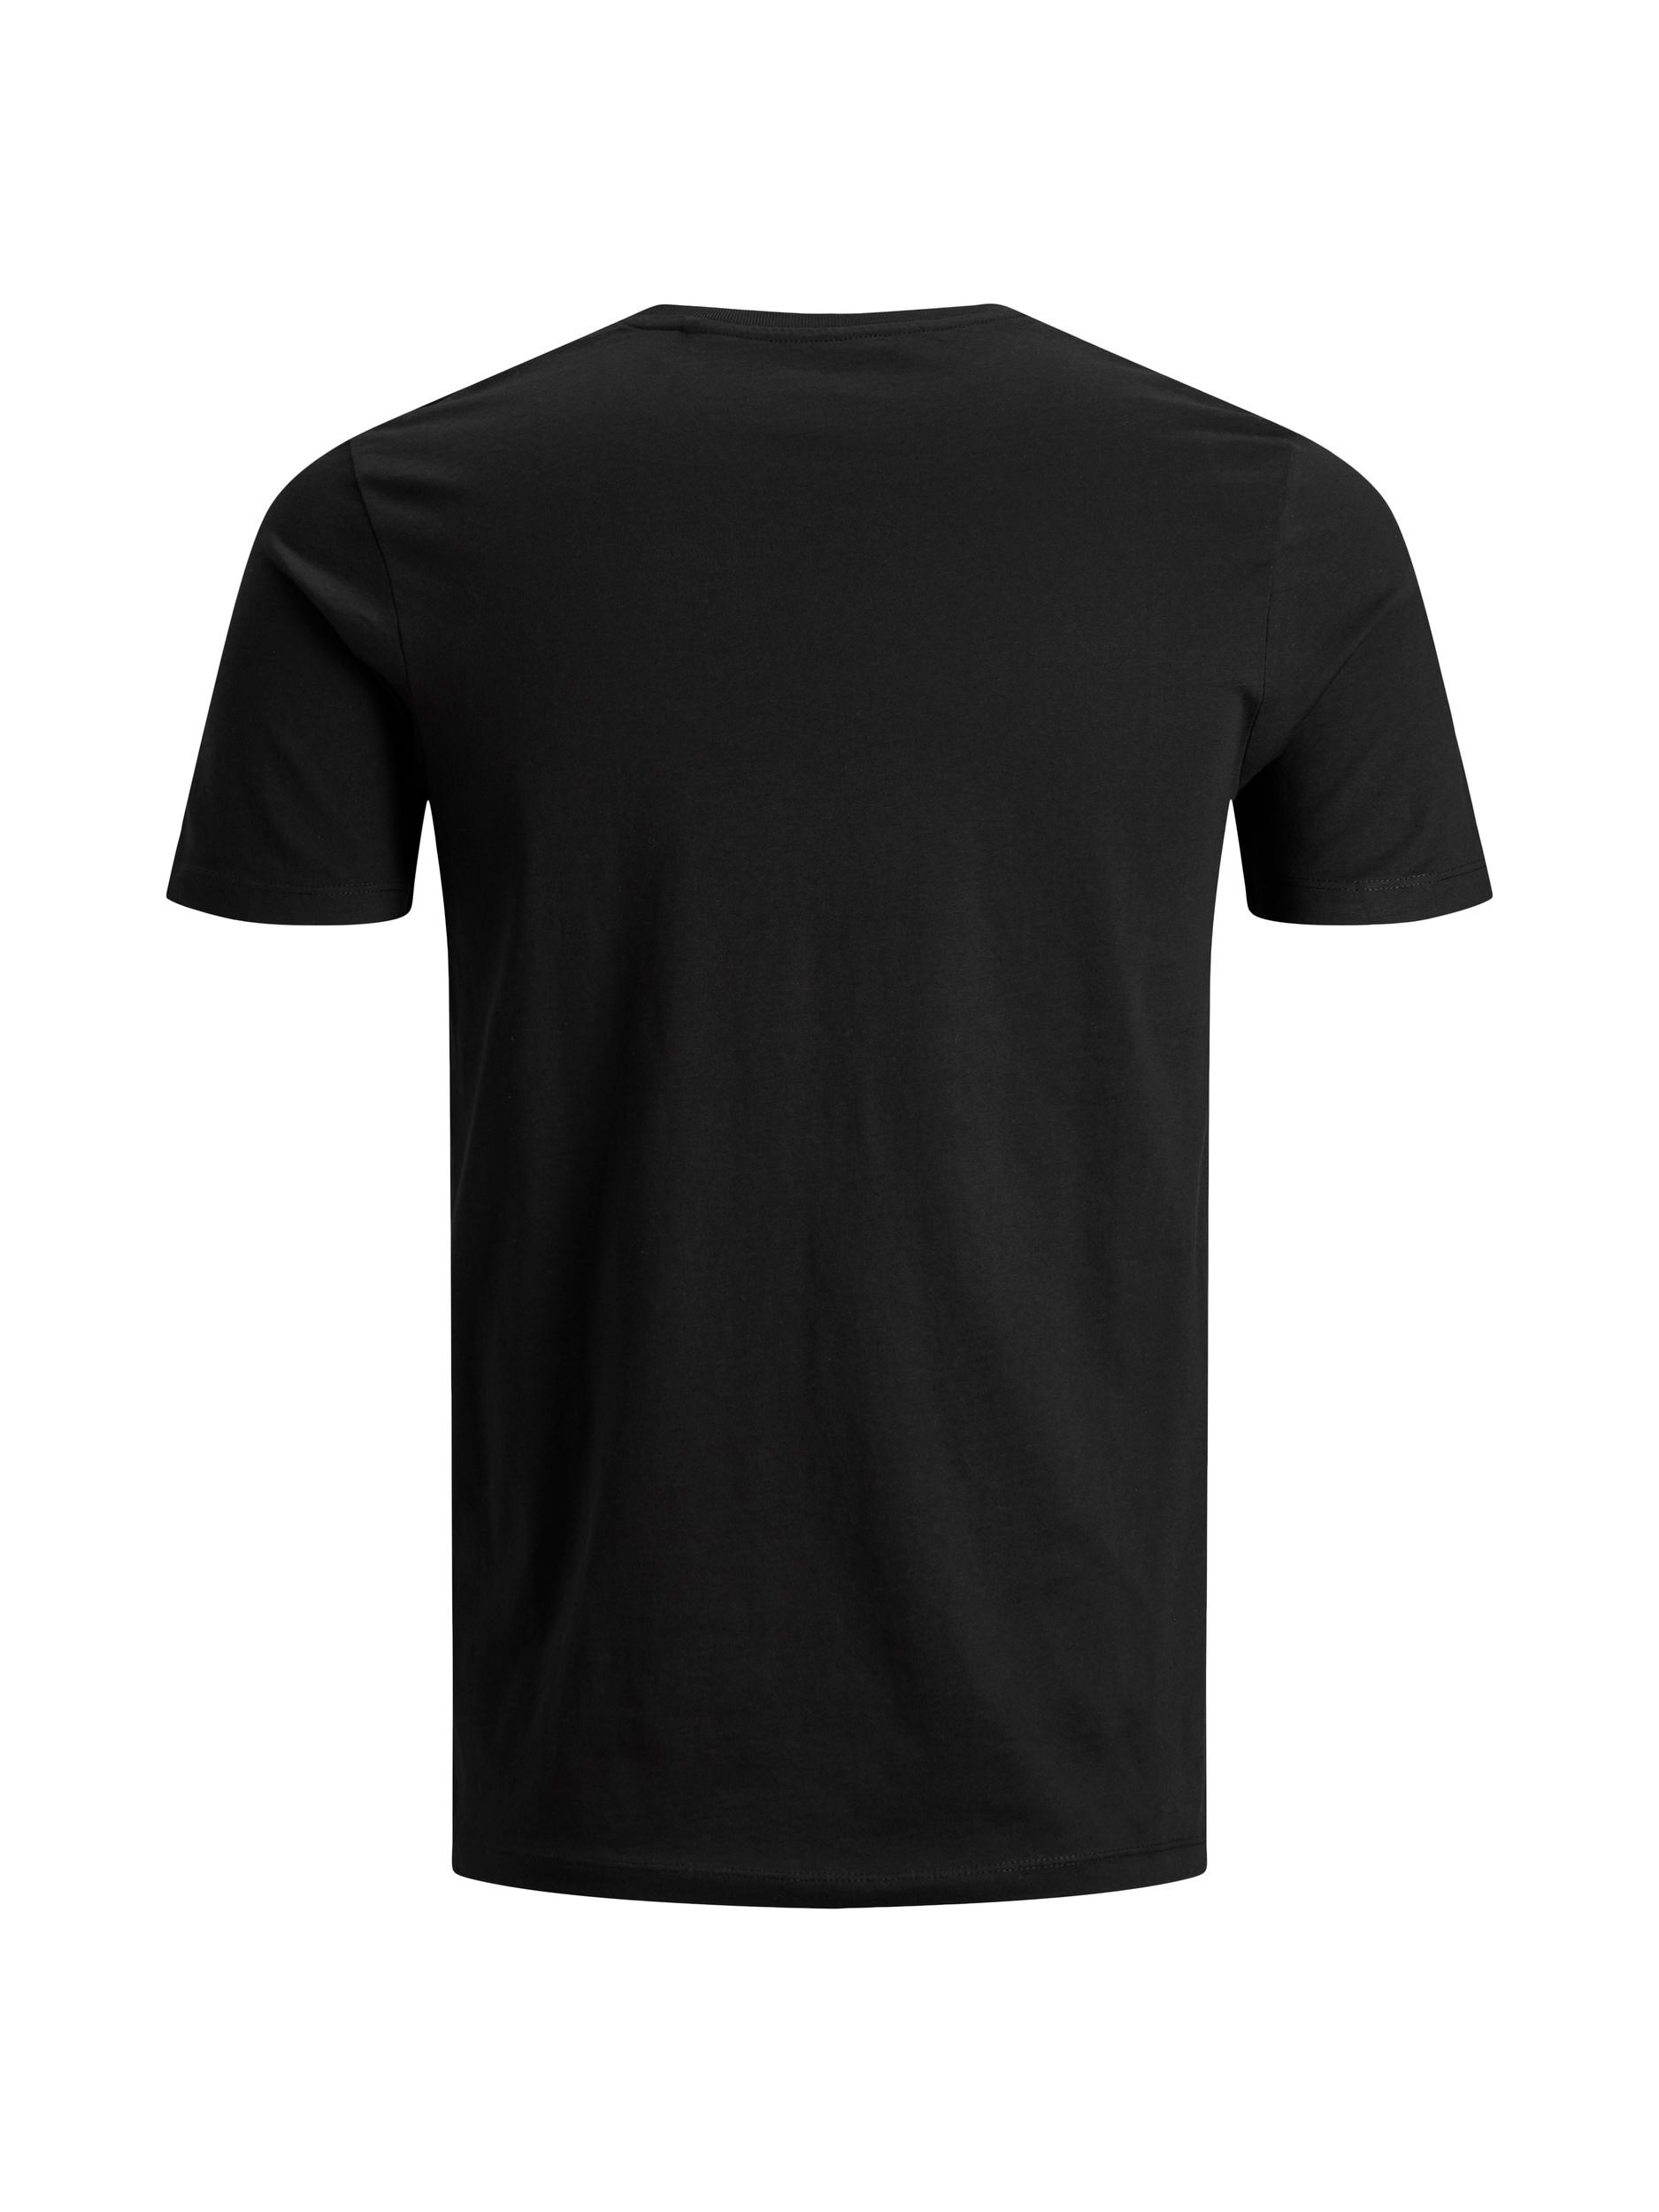 Jack Jones Erkek T-Shirt 12147844 Black